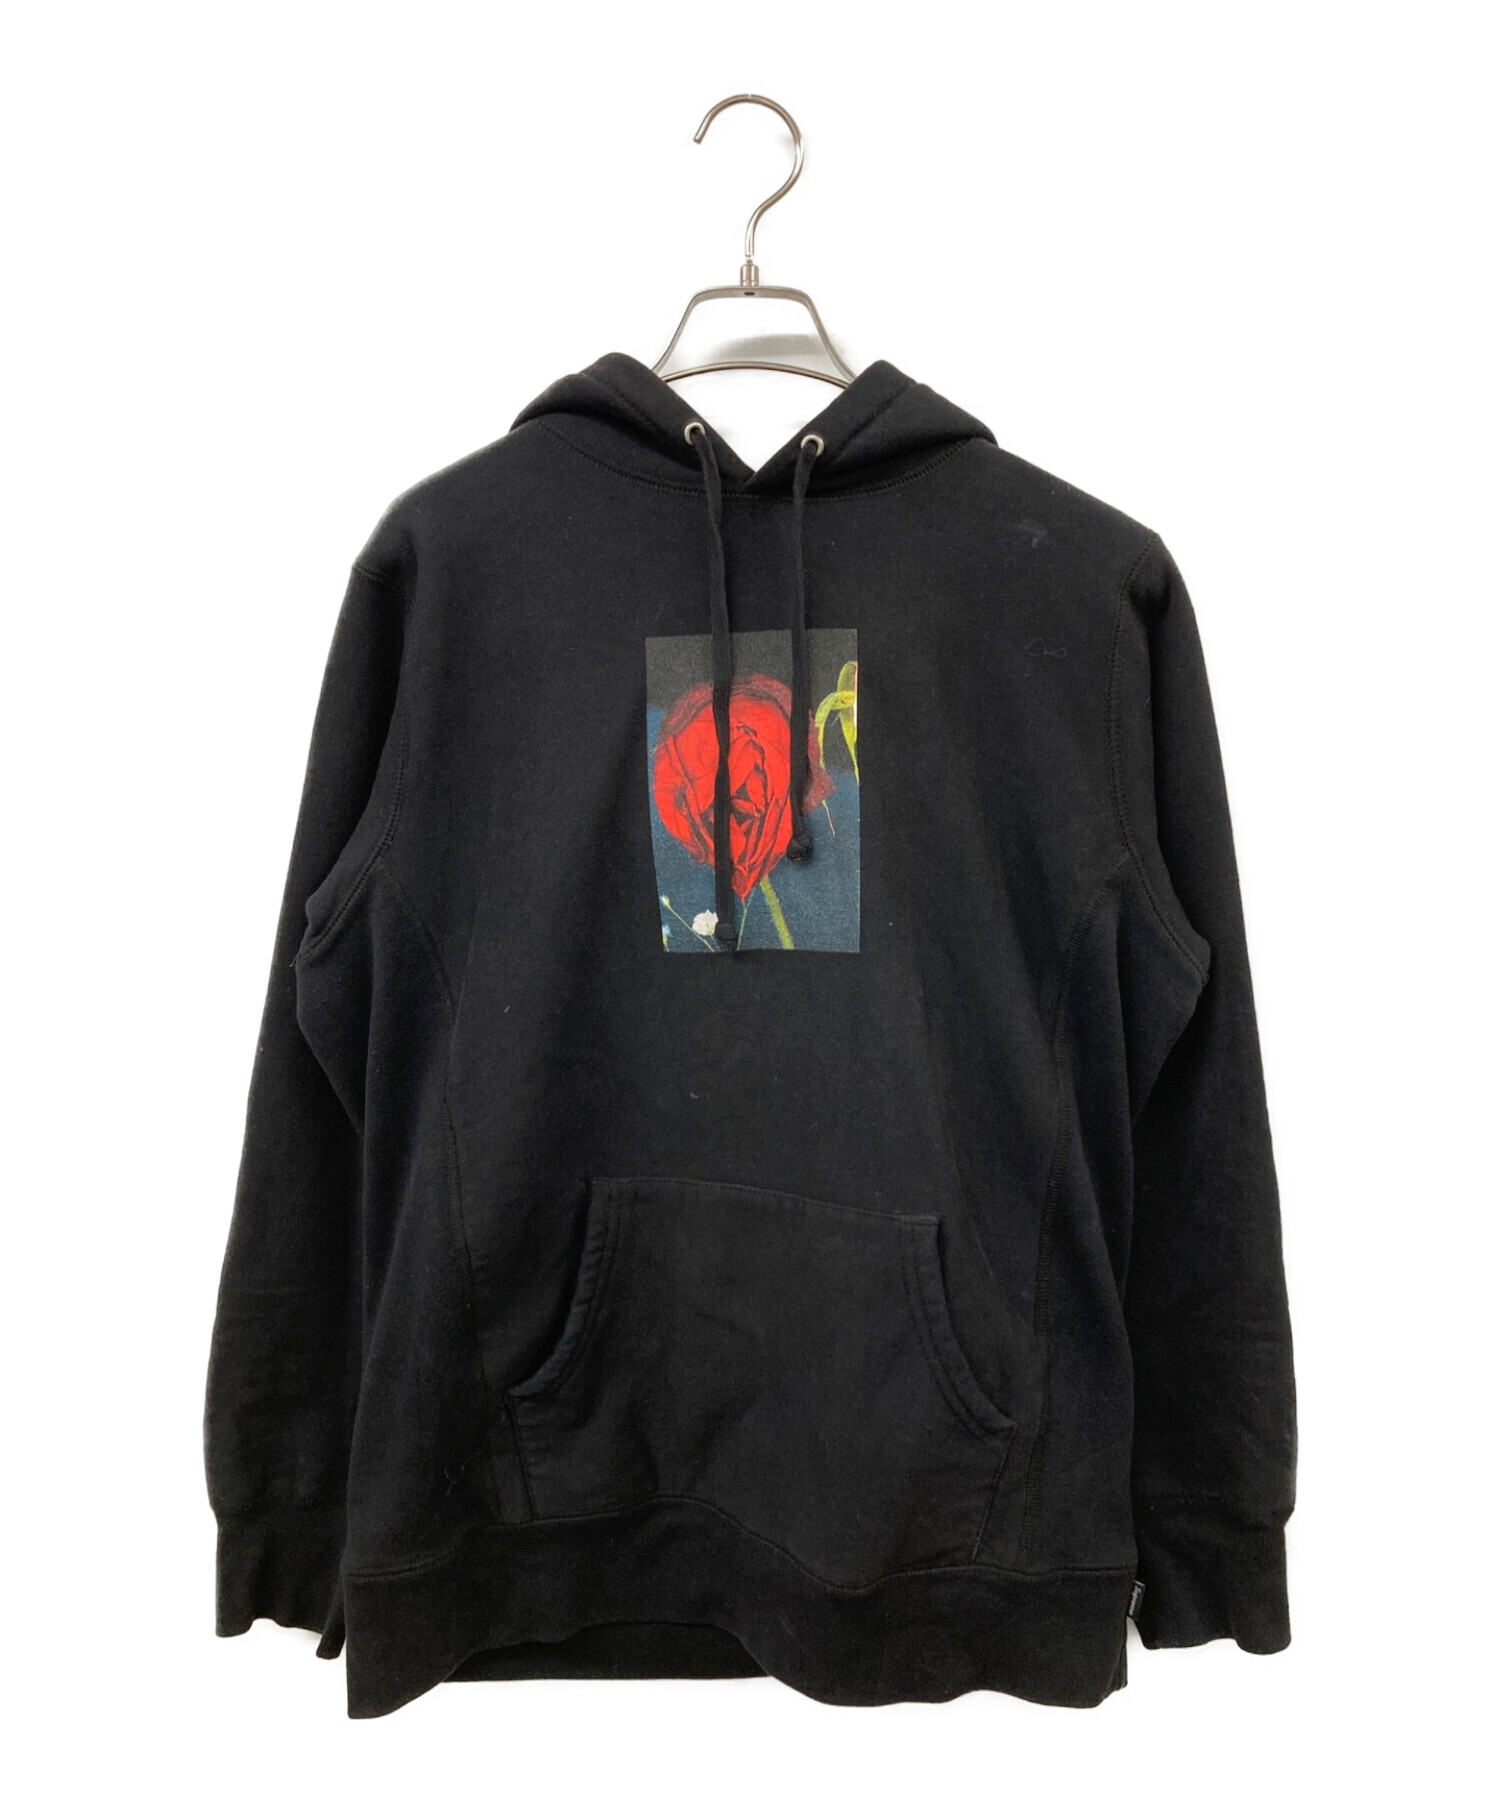 [M] Araki Rose Hooded Sweatshirt